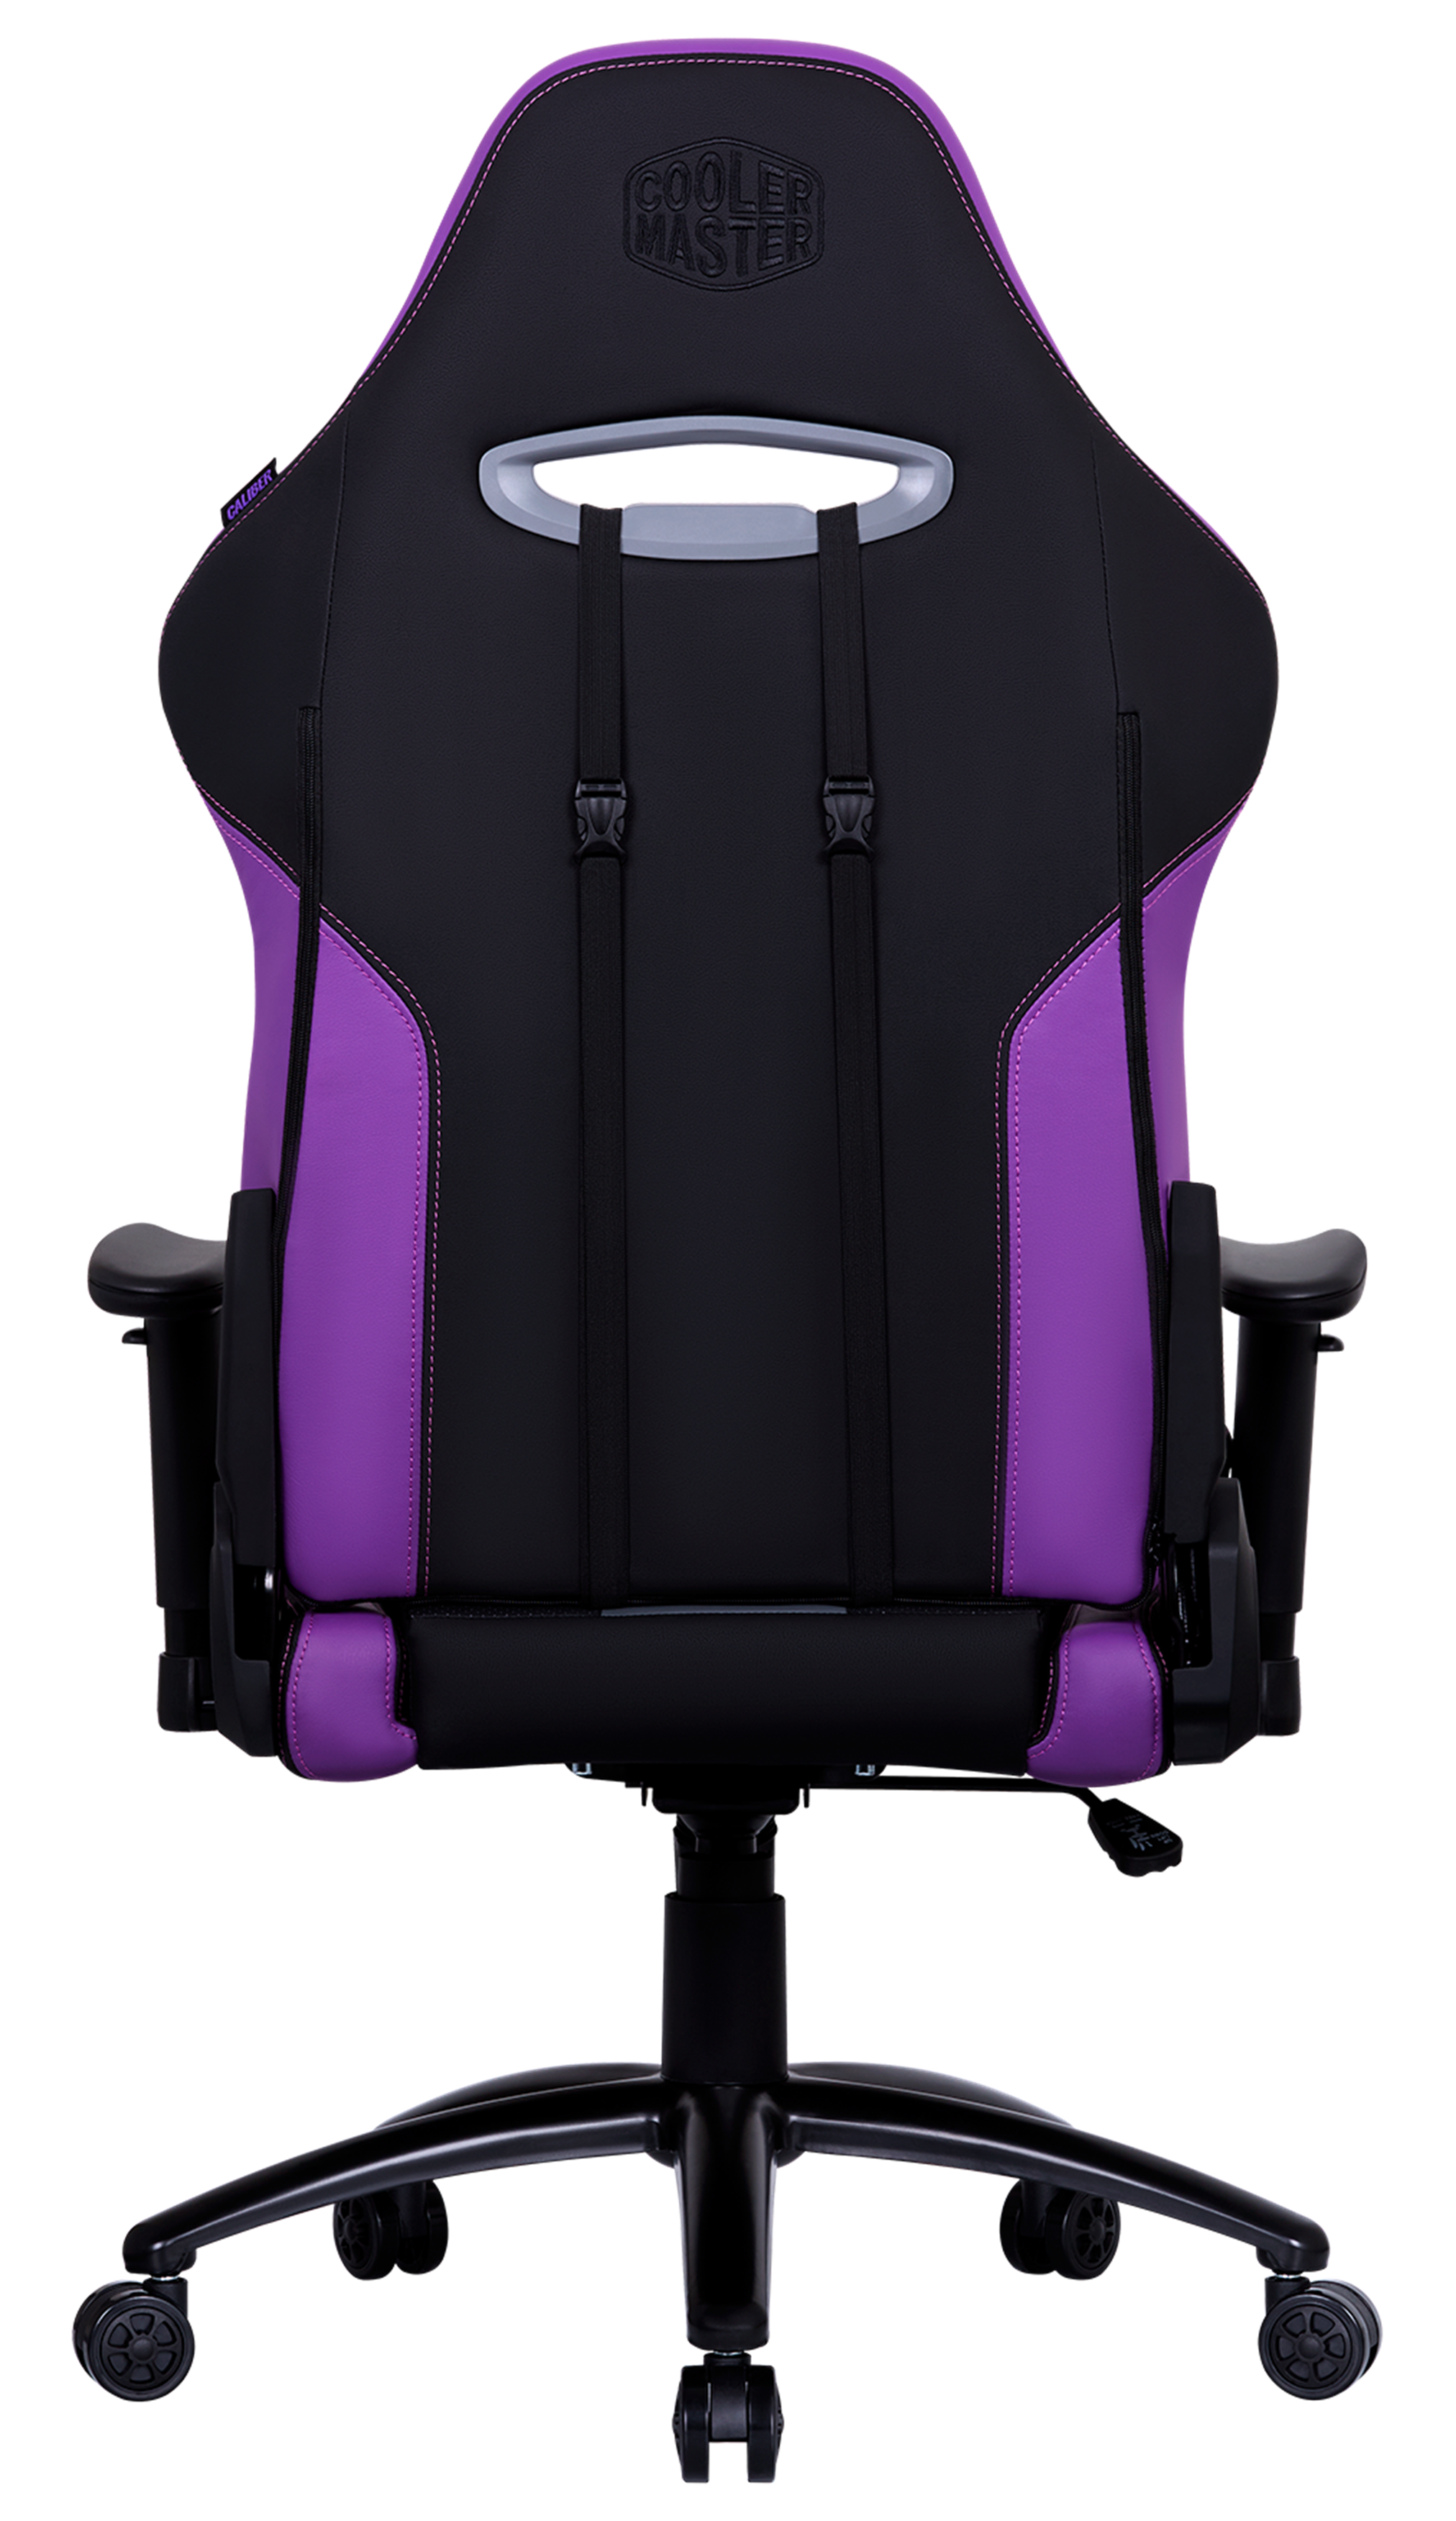 Cooler Master Caliber R3 Gaming Chair Black Ergonomic 360° Swivel, 180  Reclining, Ergonomic Lumbar Support, High Density Foam Cushions, PU Leather  For for PC Game, Office (CMI-GCR3-BK) 